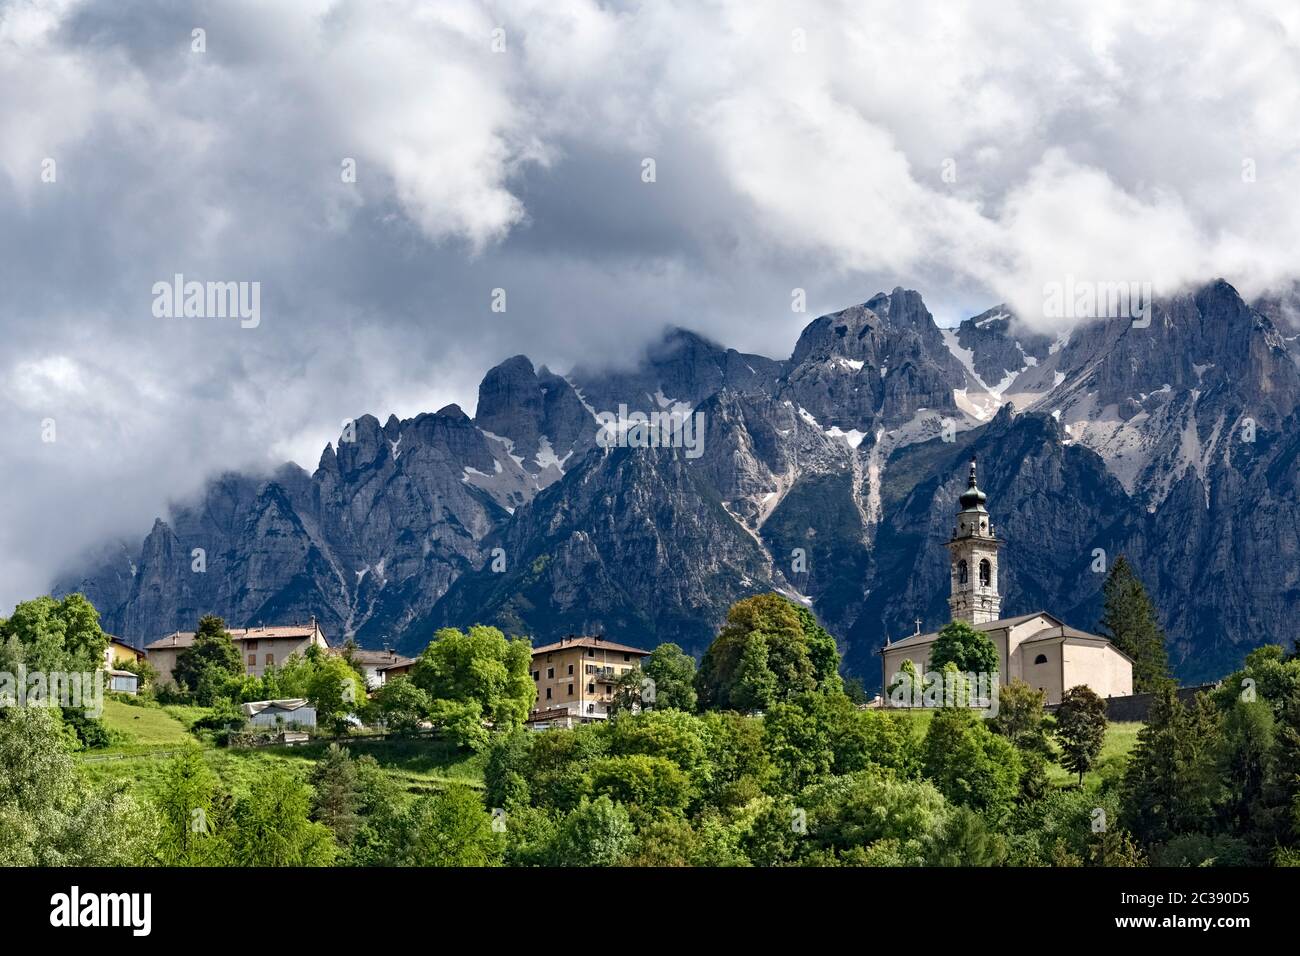 The village of Parrocchia and in the background Mount Carega of the Piccole Dolomiti. Vallarsa, Trento province, Trentino Alto-Adige, Italy, Europe. Stock Photo